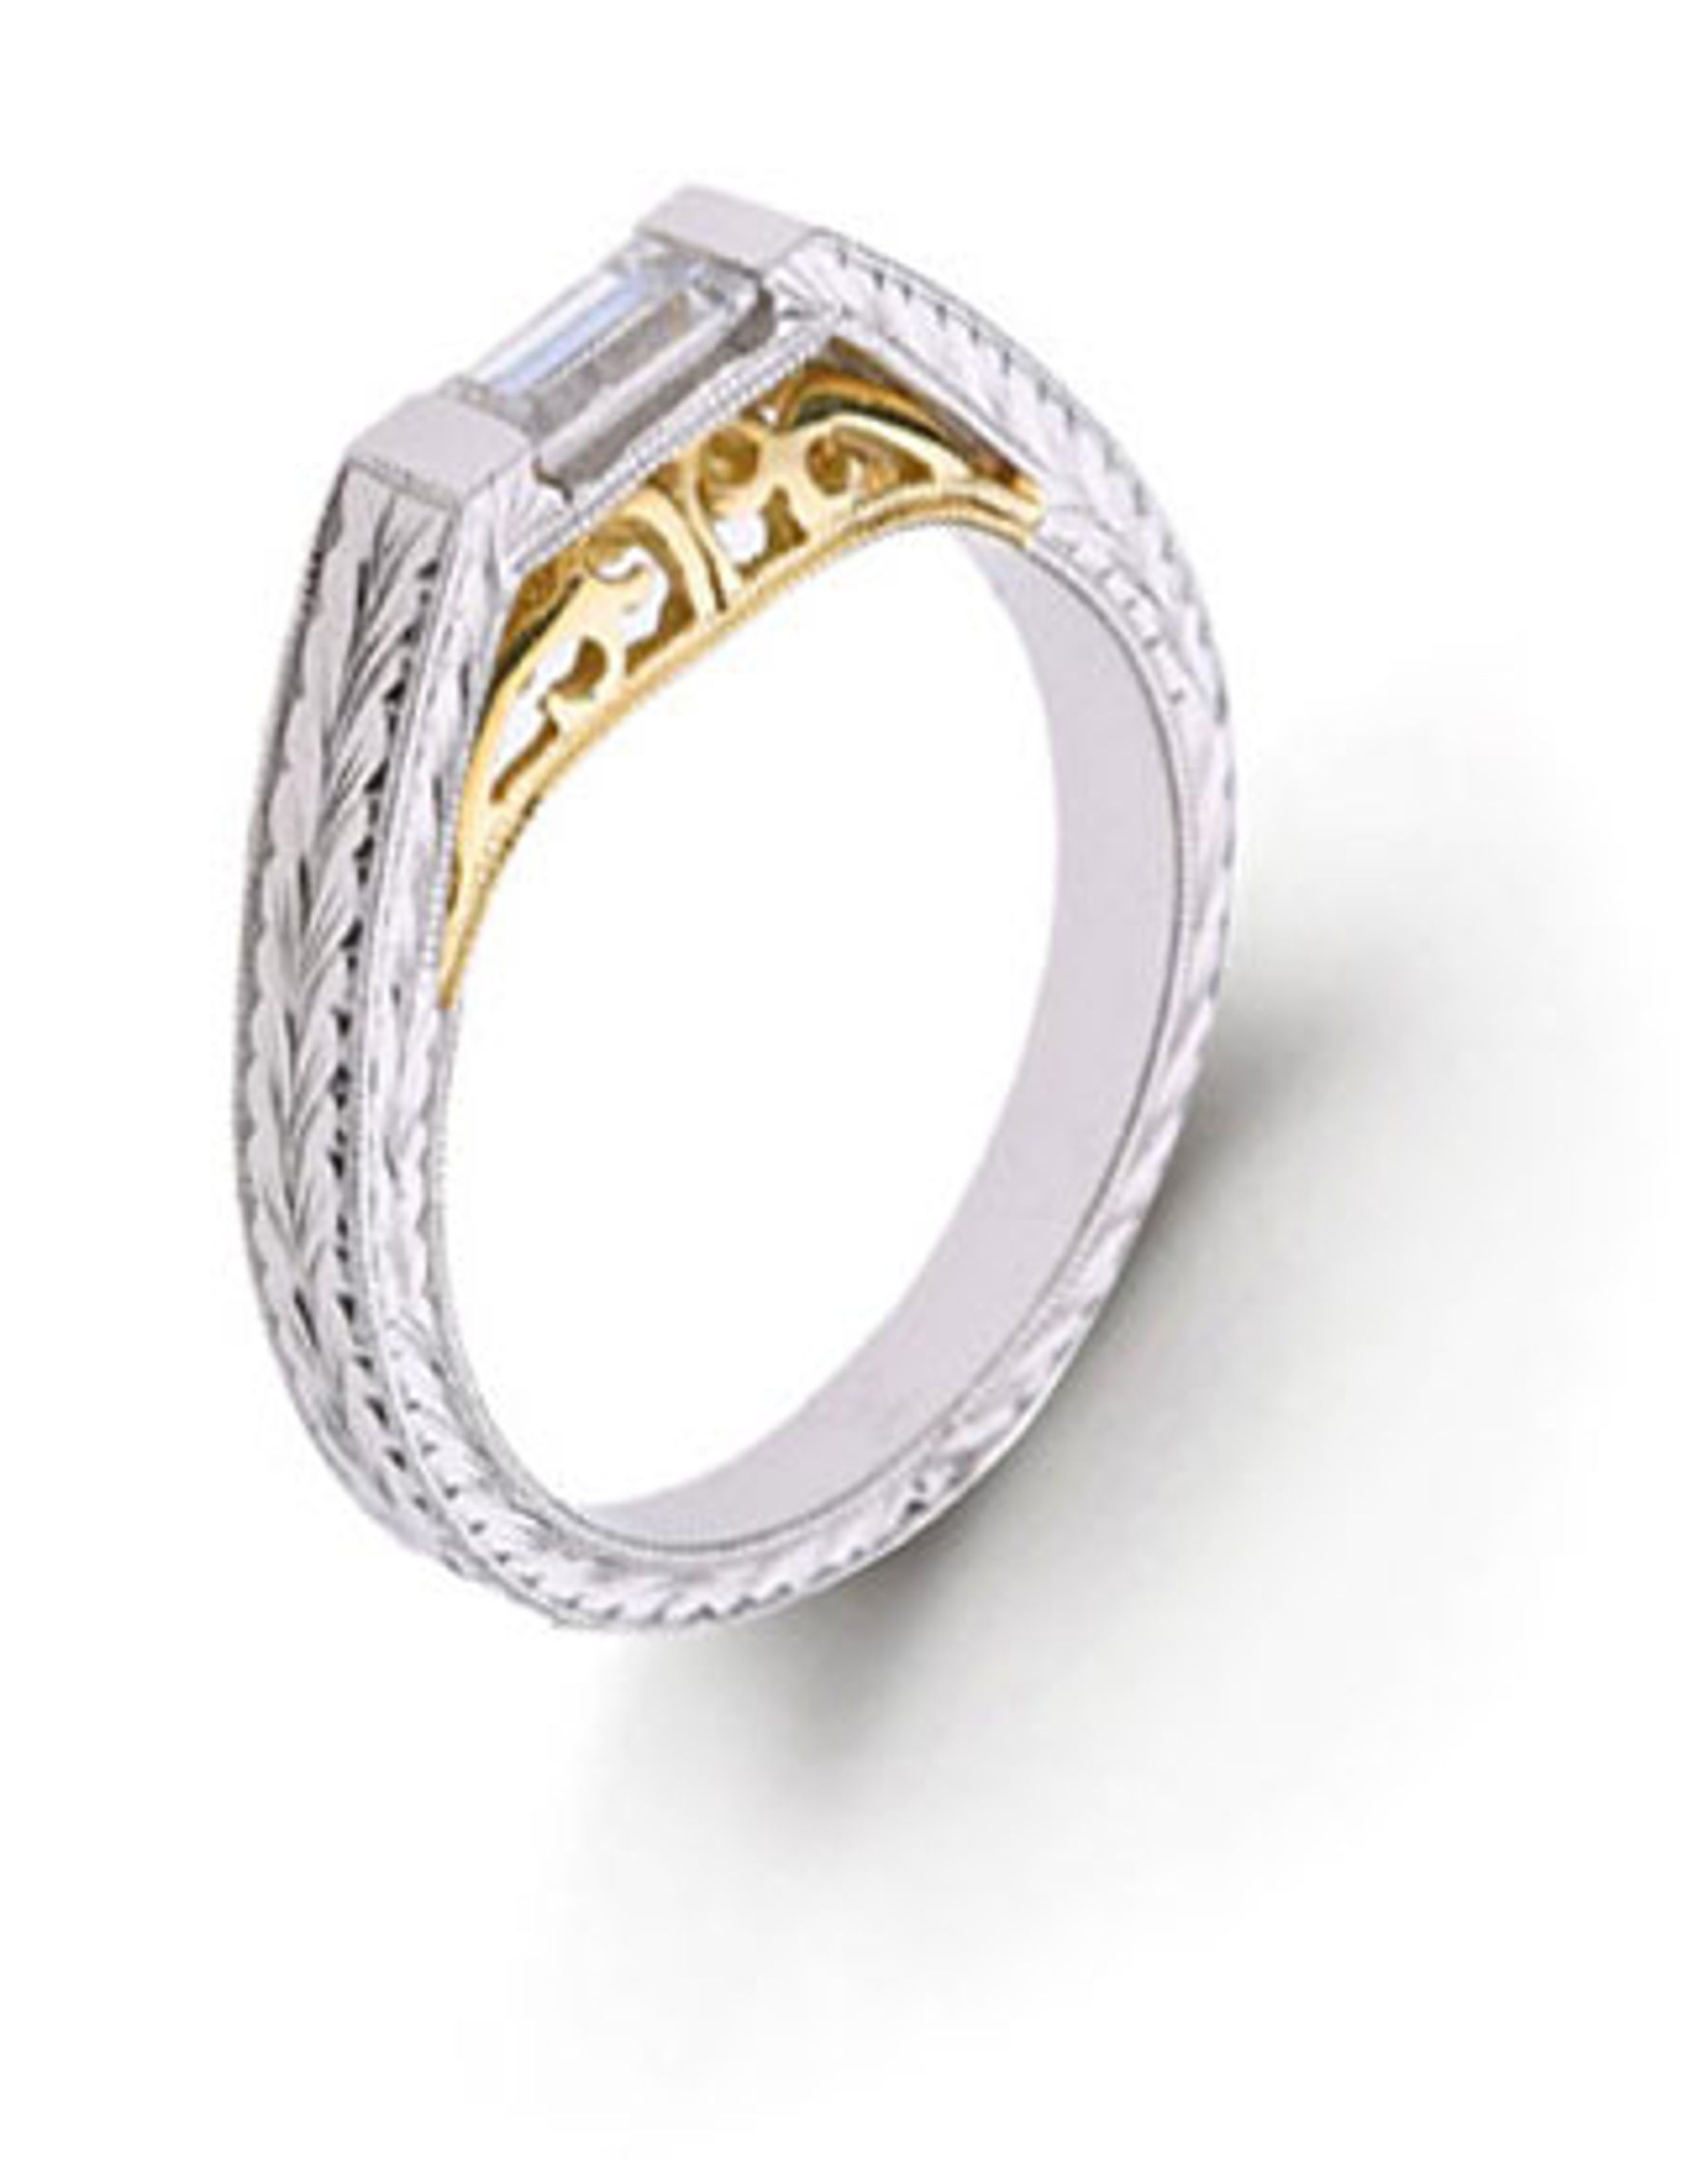 Platinum Hand Engraved Filigree. View Engagement Ring Matching Bands